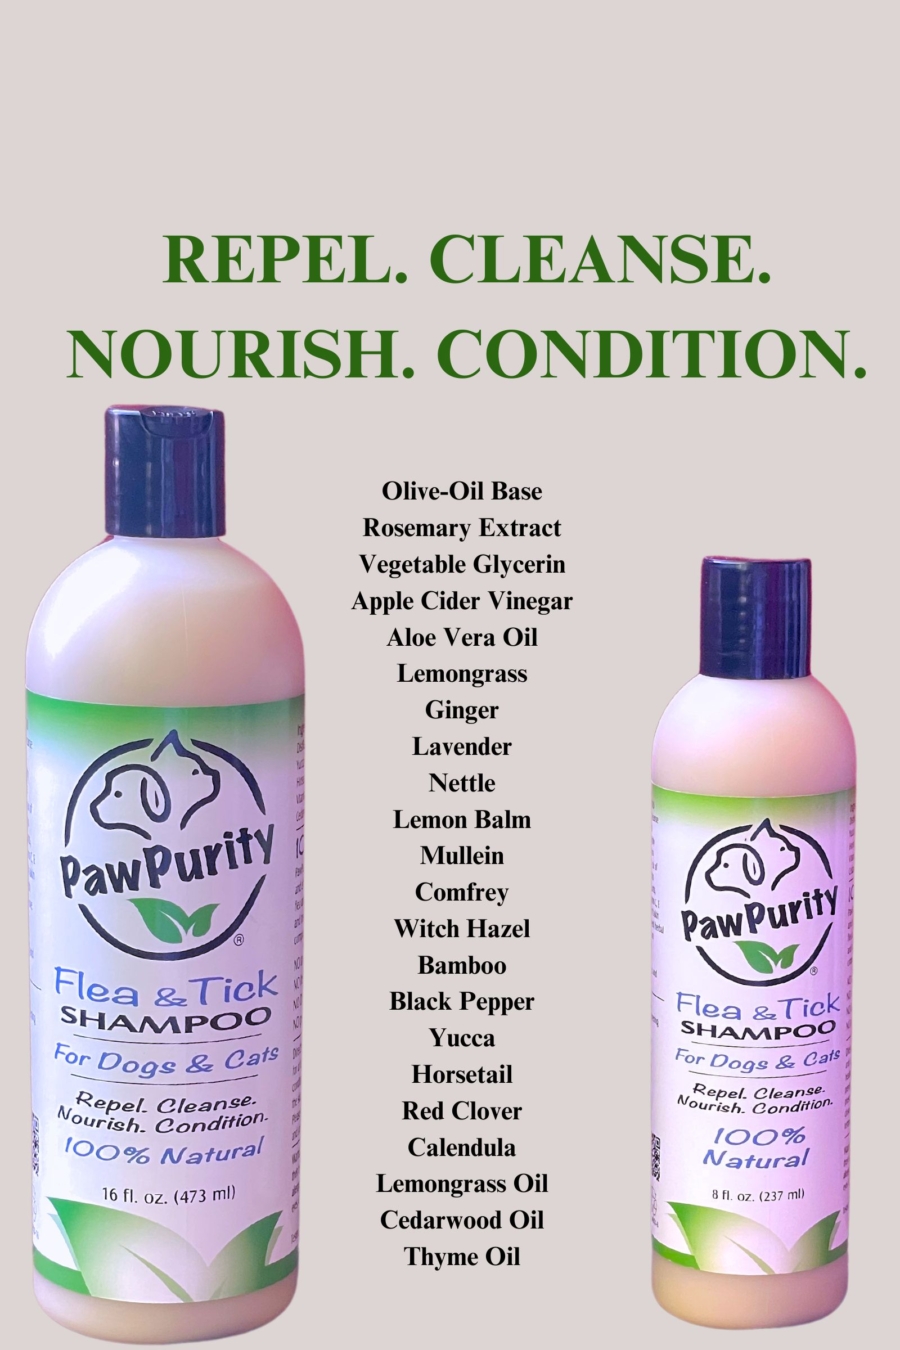 PawPurity Flea & Tick Shampoo in 8 ounce and 16 ounce sizes